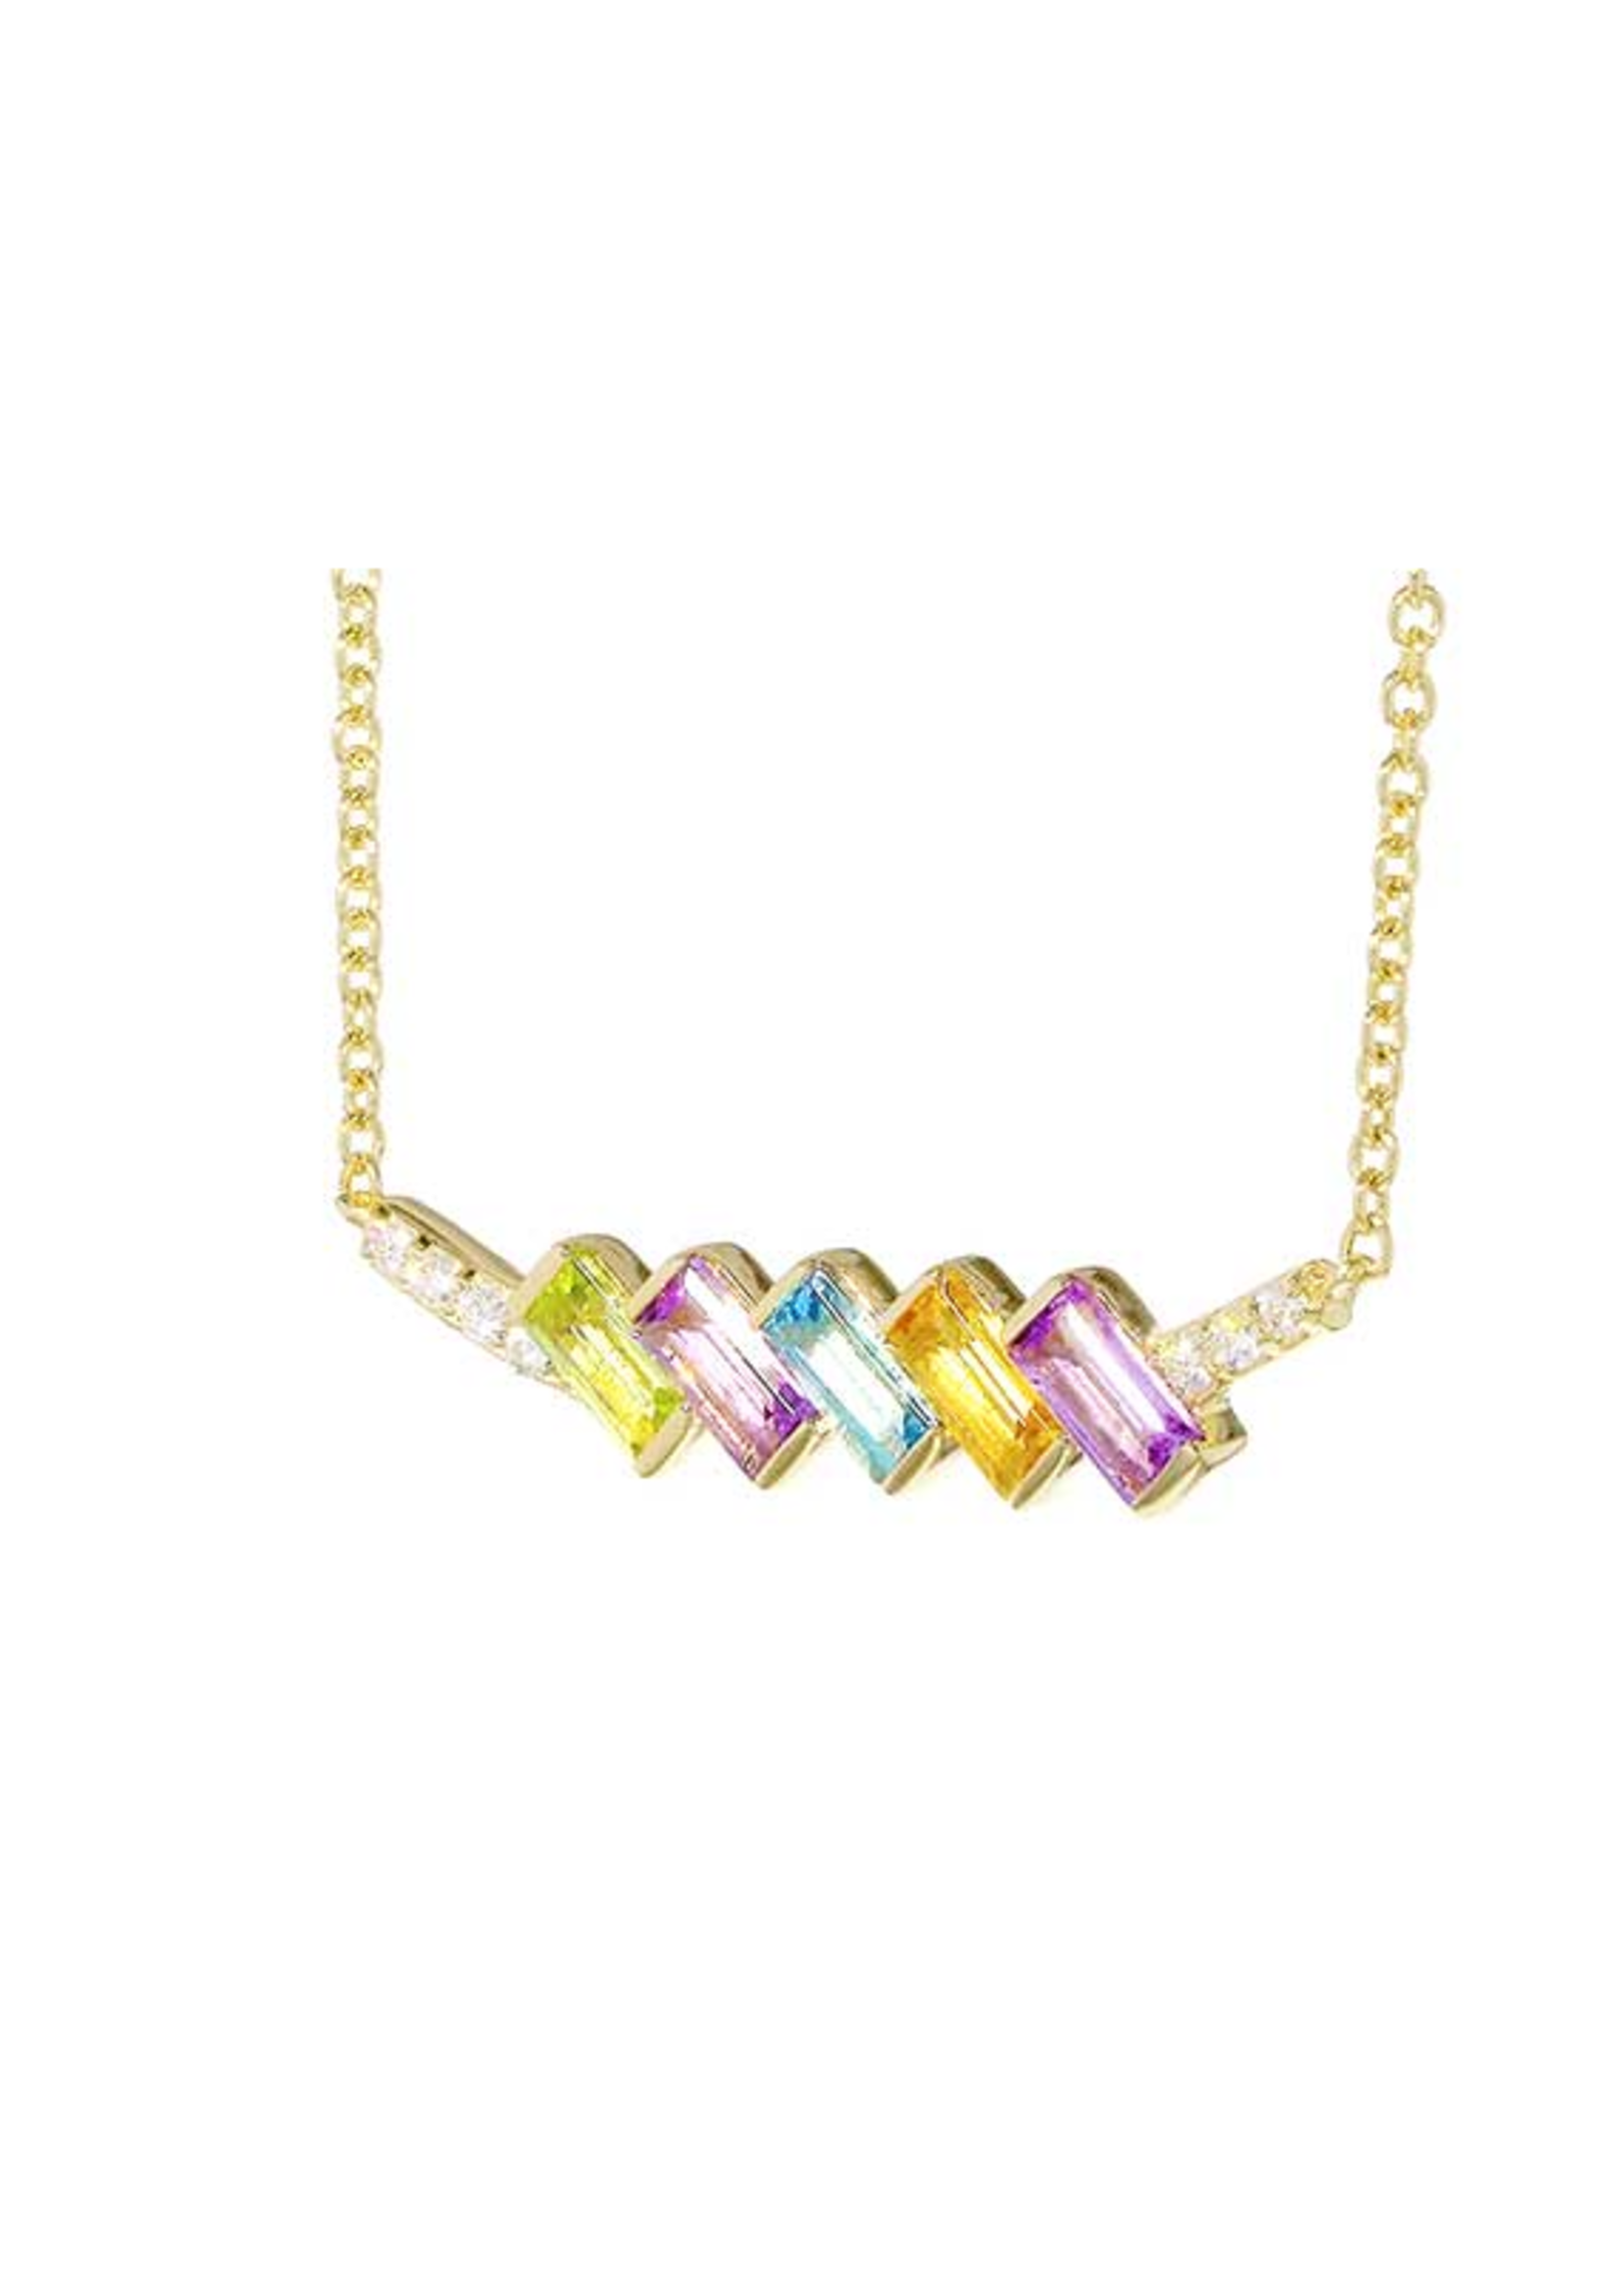 ALLISON-KAUFMAN COMPANY 14KY Gemstone and Diamond Necklace